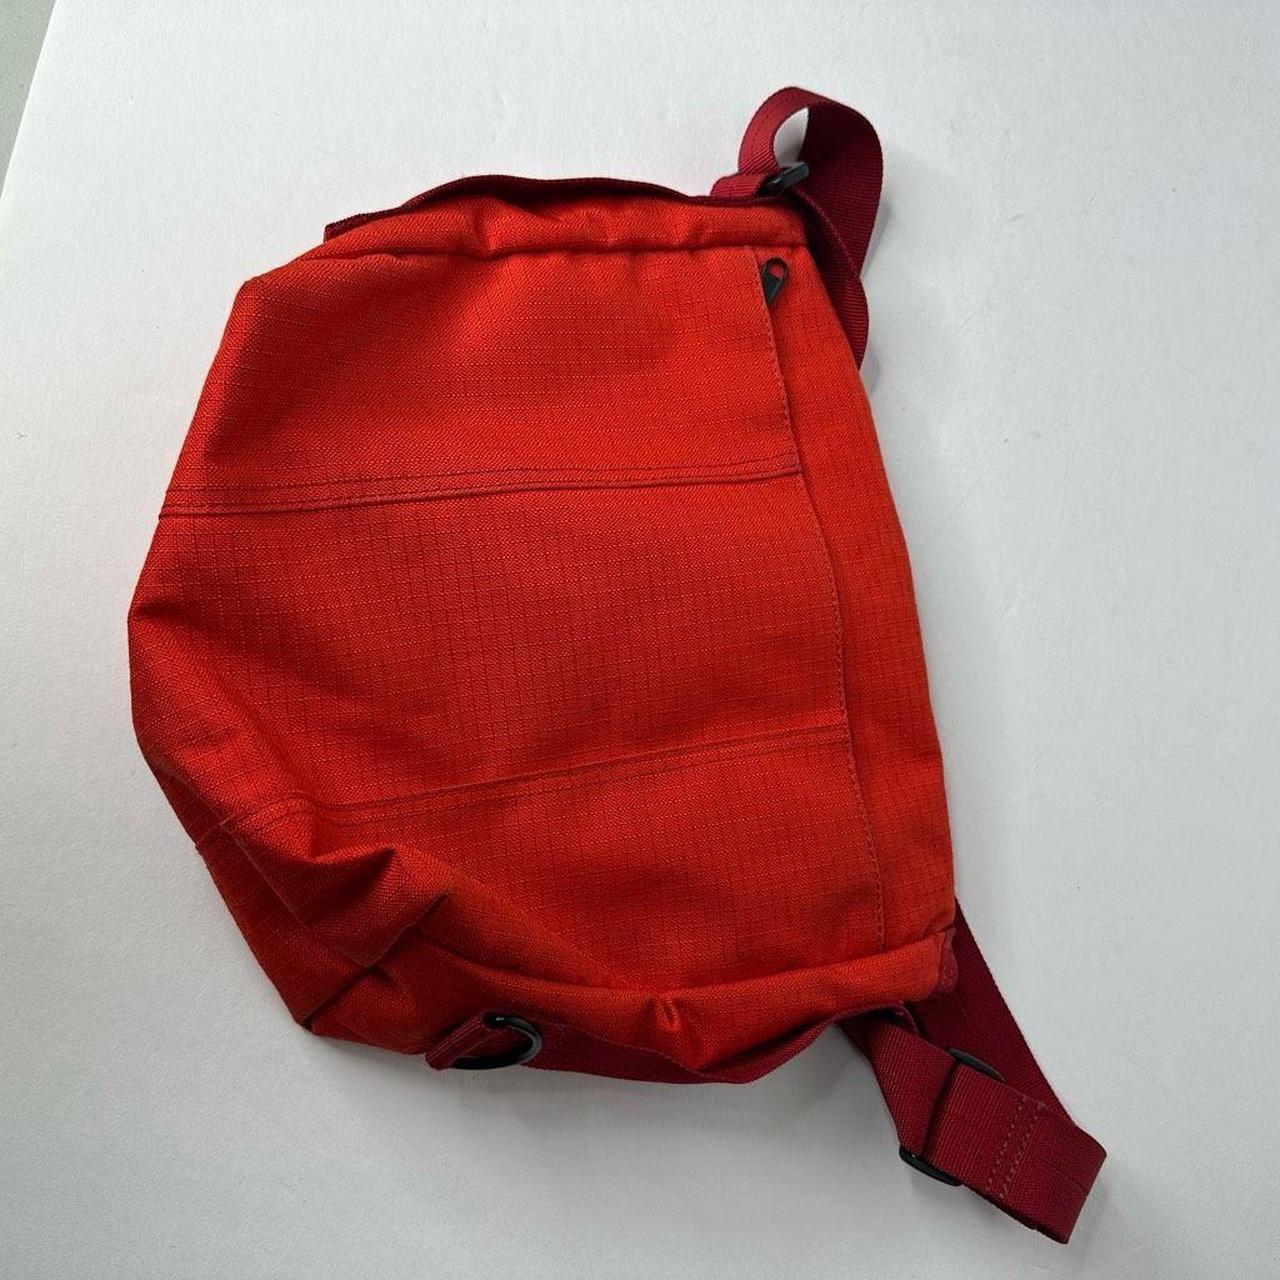 Timbuk2 XS Classic Messenger Bag Black with red - Depop